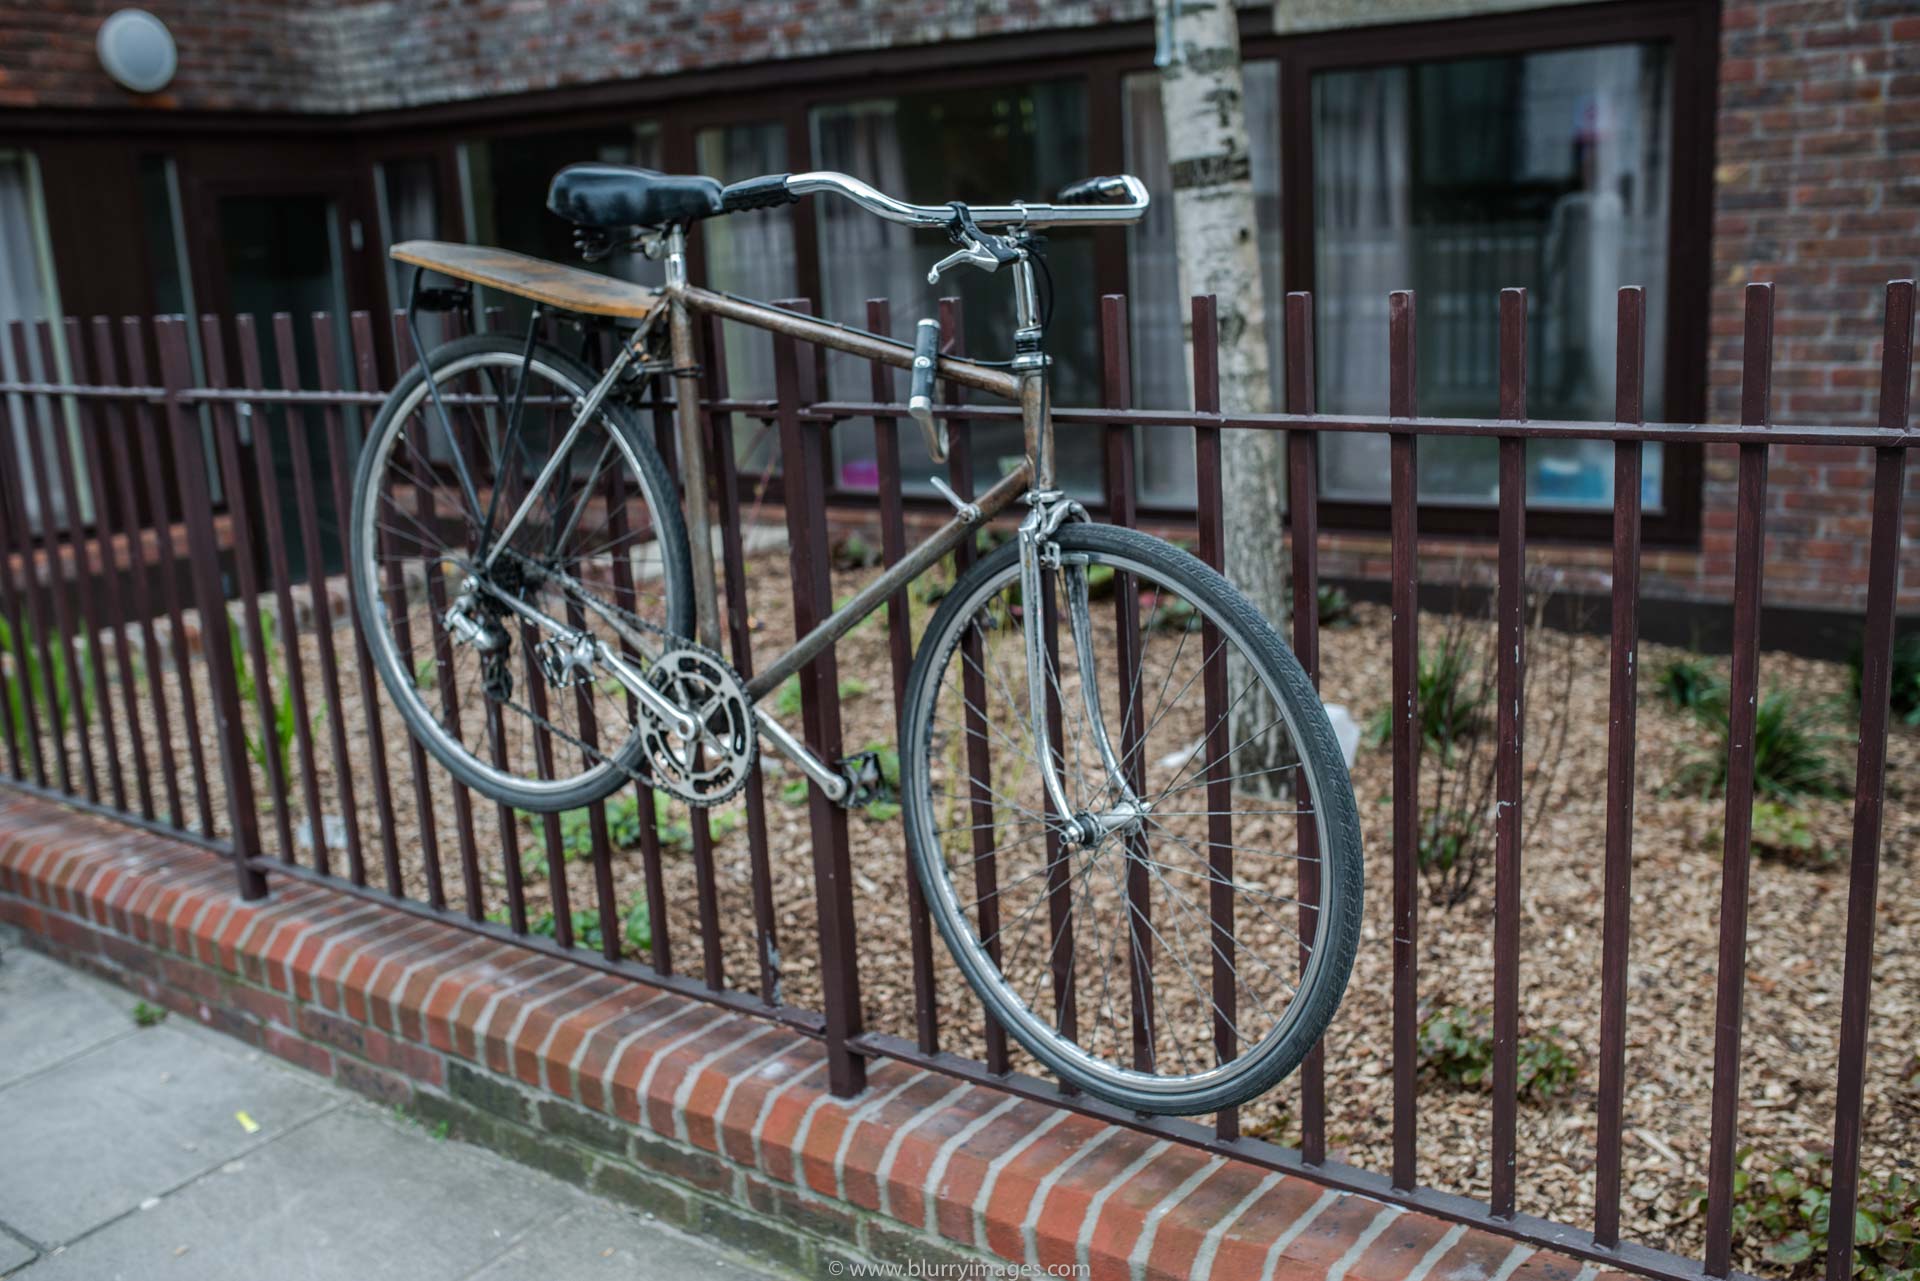 bike, bike chained, fence, brown fence, red bricks, handlebar, outdoors, tree